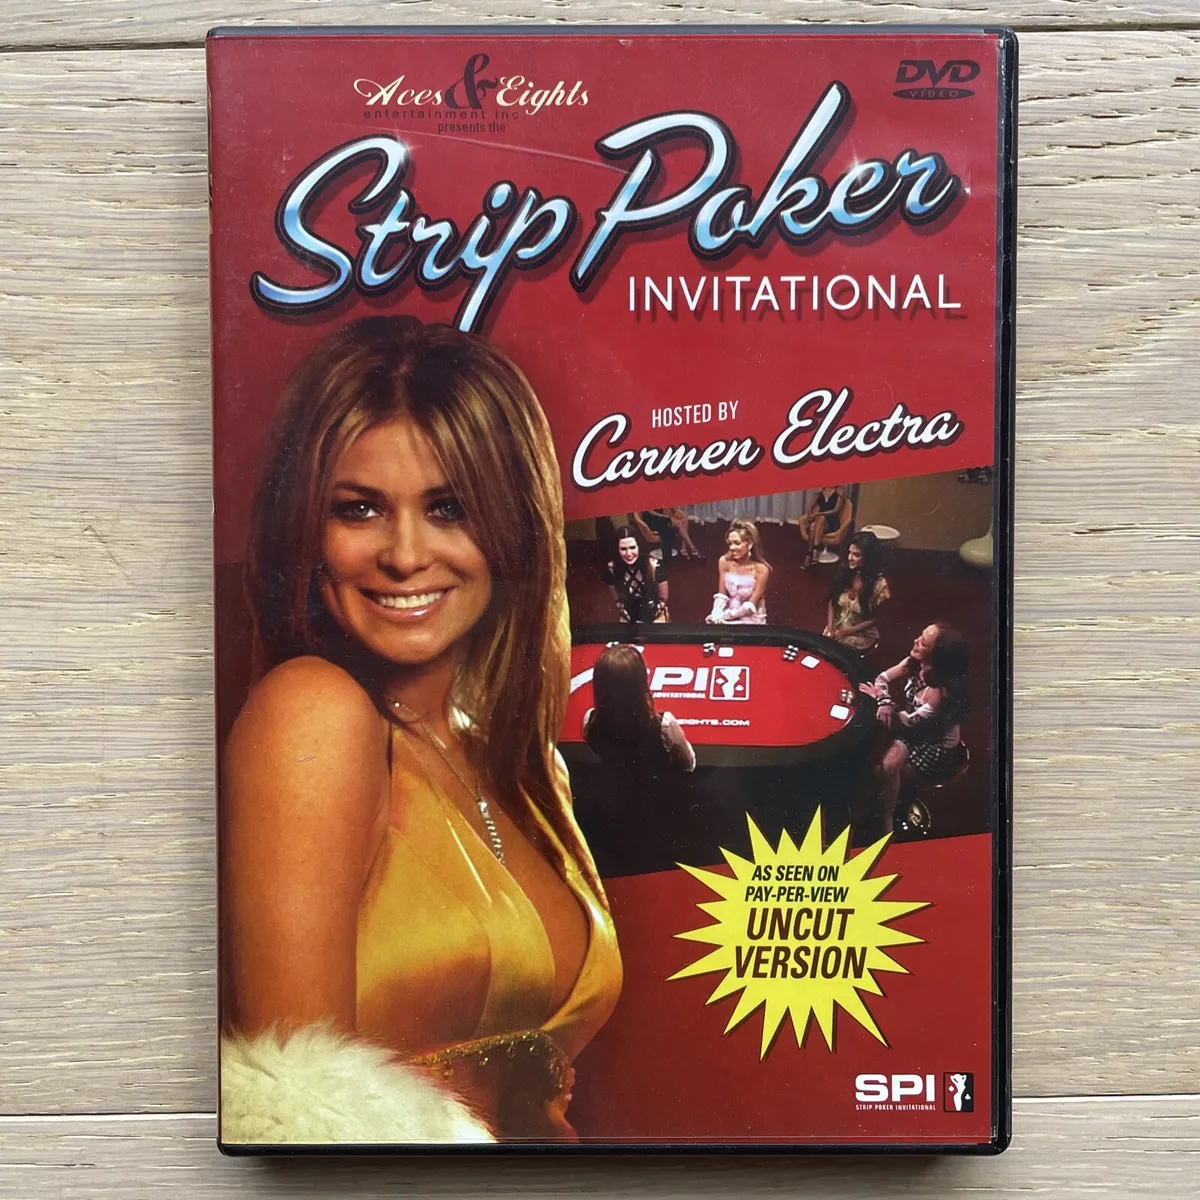 antony tonks recommends carmen electra strip poker pic